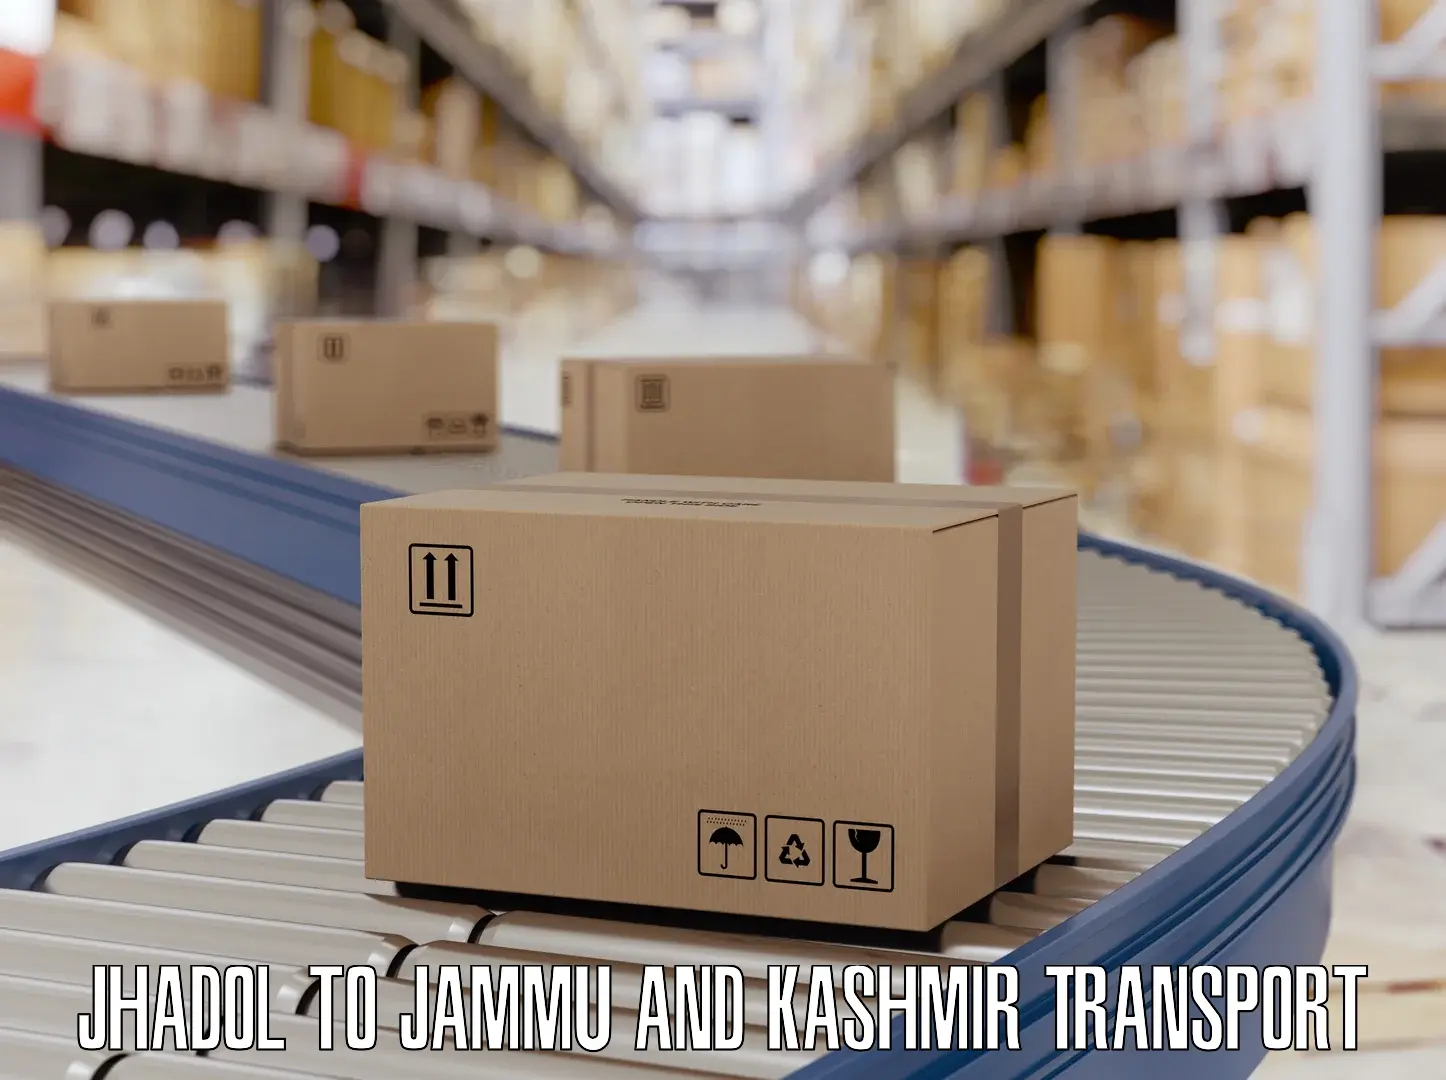 Shipping services Jhadol to Srinagar Kashmir